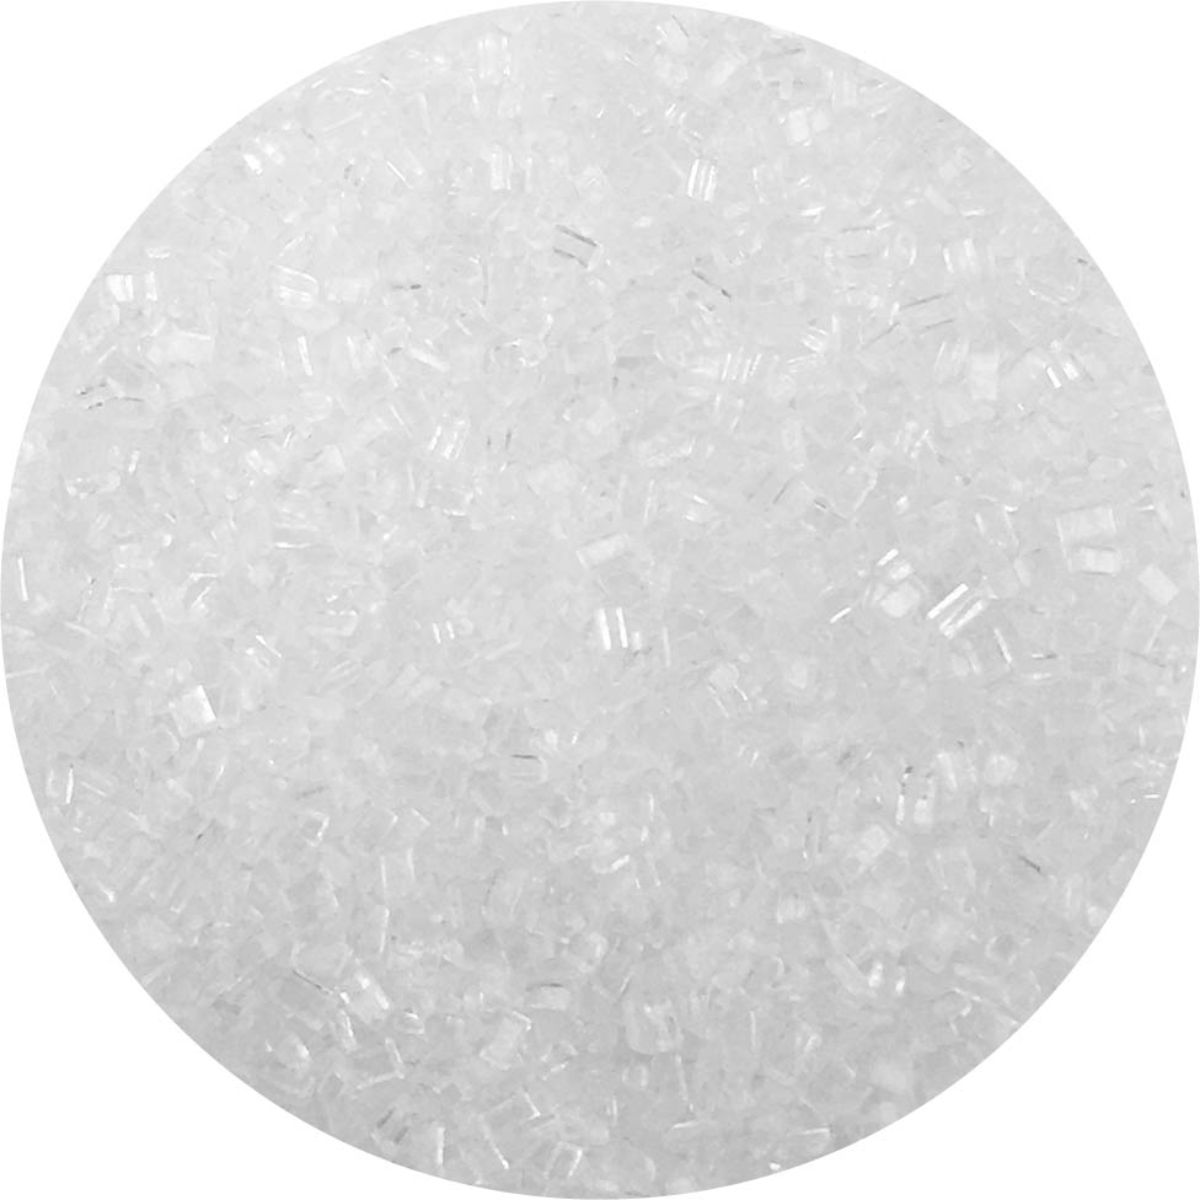 CK Sugar Crystals Whimsical White 4oz/16oz